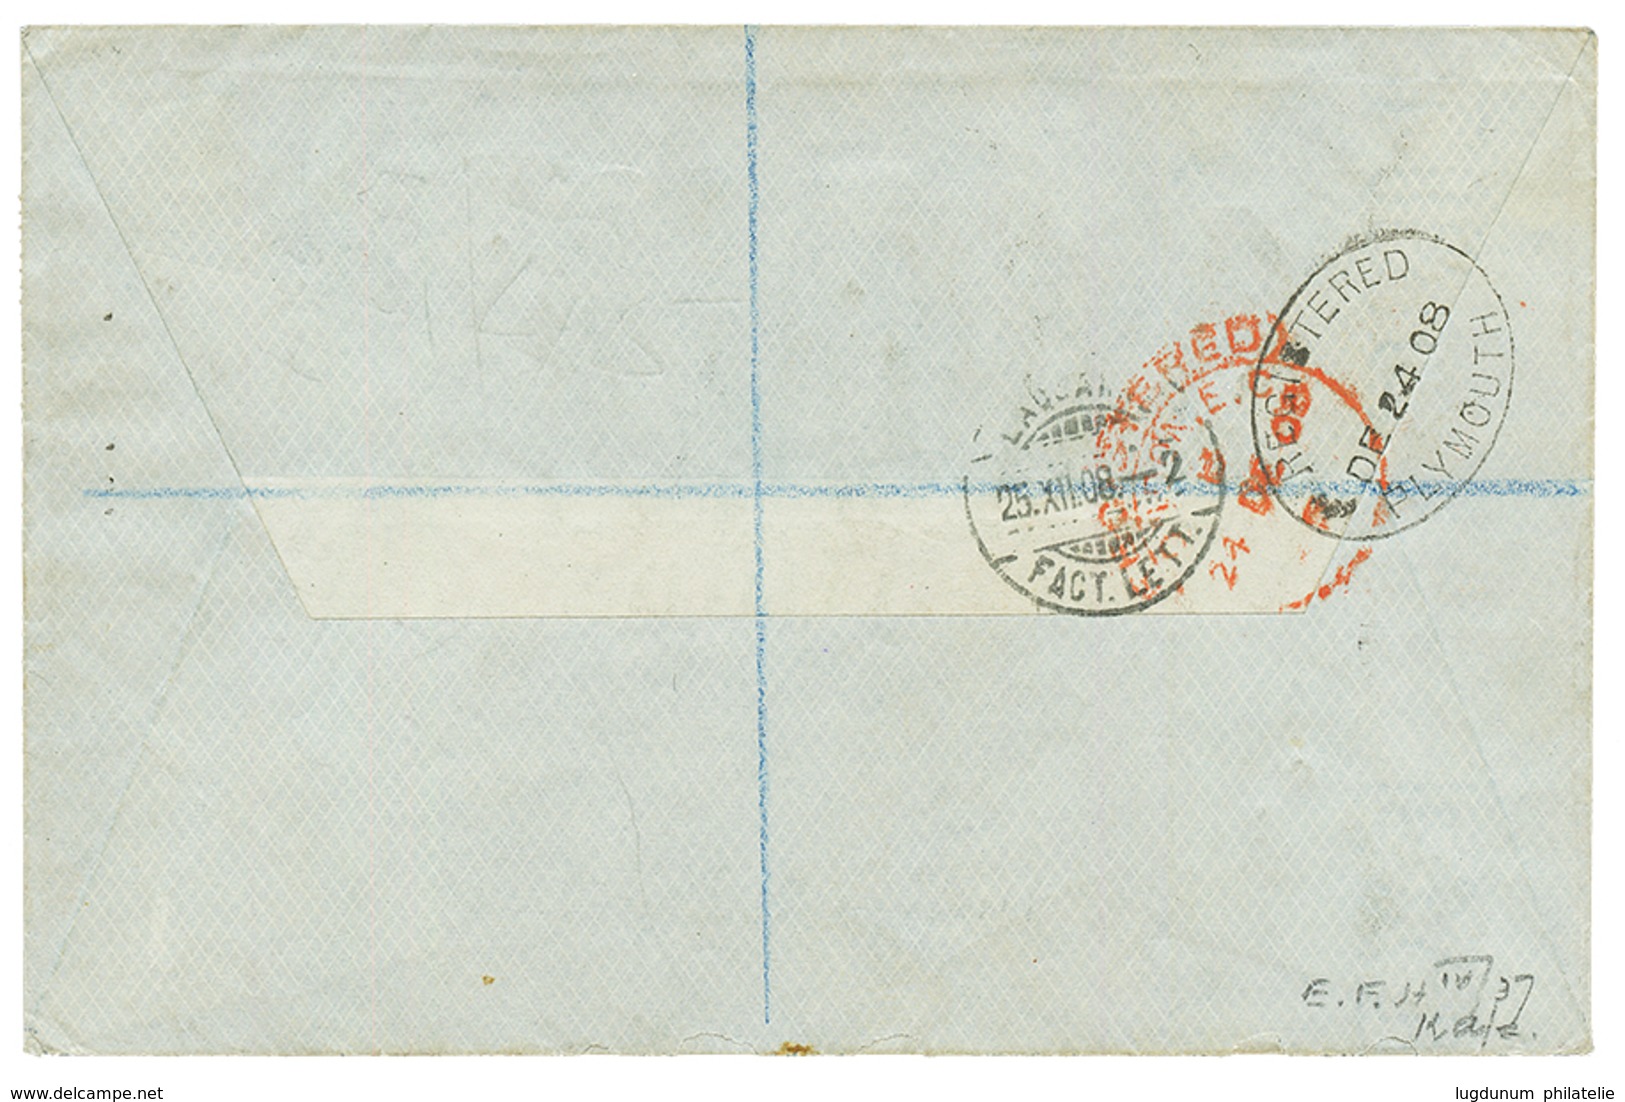 "SEKONDI" : 1908 ONE PENNY On 6d (x4) + 1d Canc. SEKONDI On REGISTERED Envelope To SWITZERLAND. RARE. Vf. - Gold Coast (...-1957)